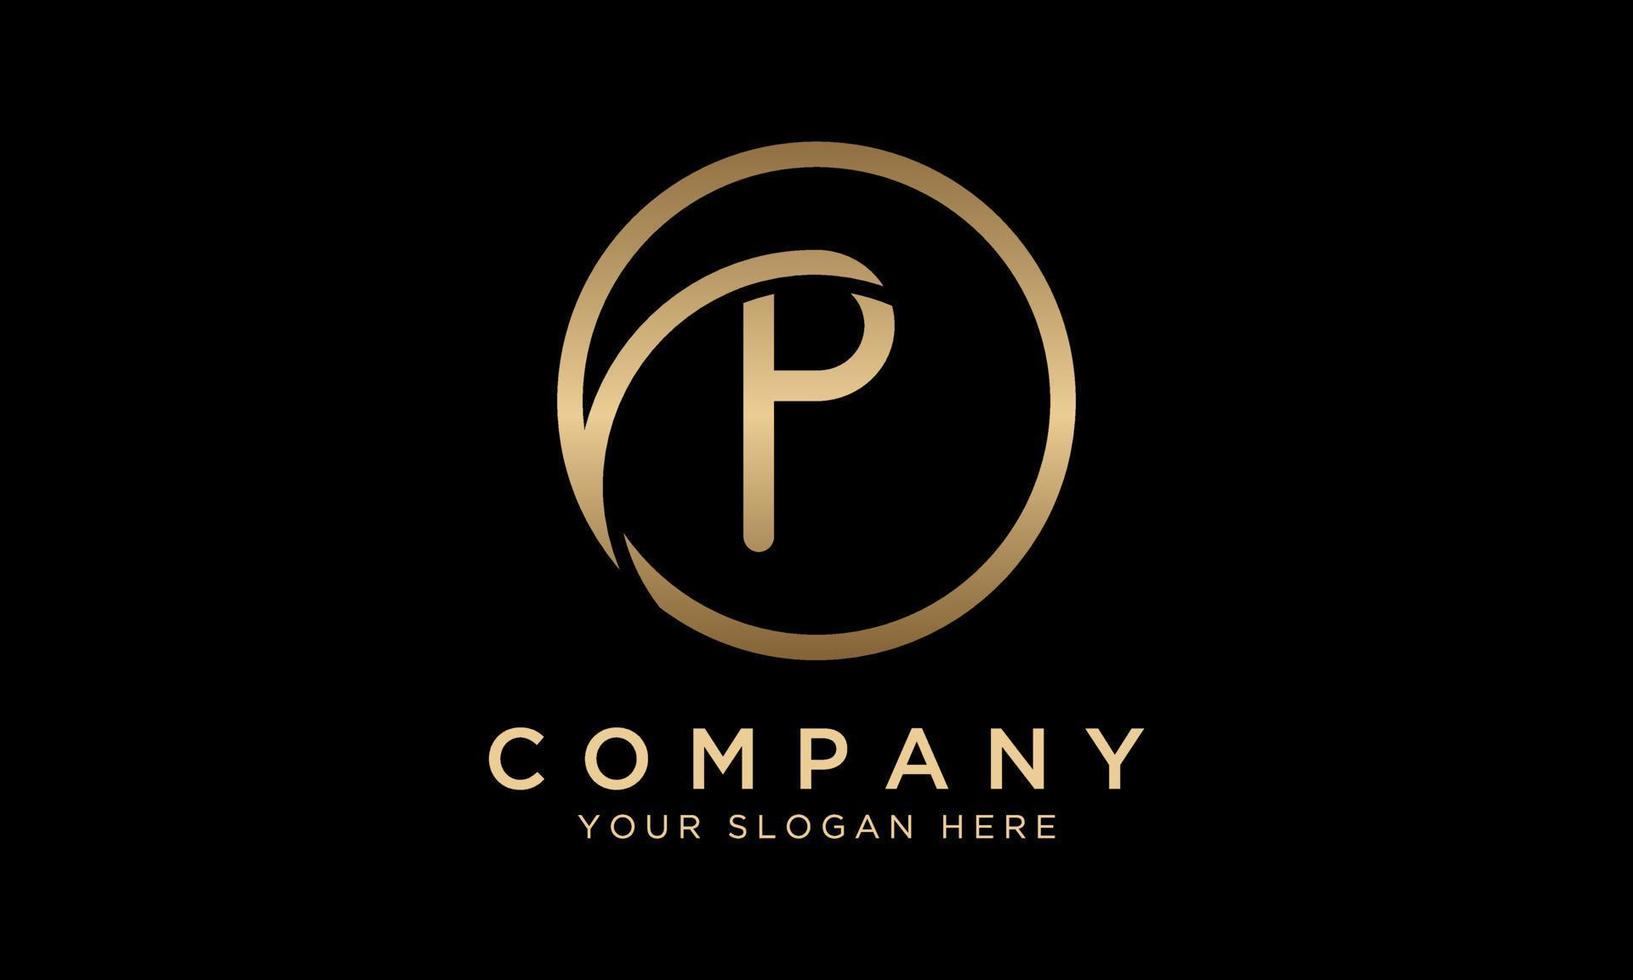 p-Buchstaben-Logo mit Kreisform. moderne, einzigartige kreative p-logo-design-vektorvorlage. elegantes identitätsdesign in goldfarbe. vektor